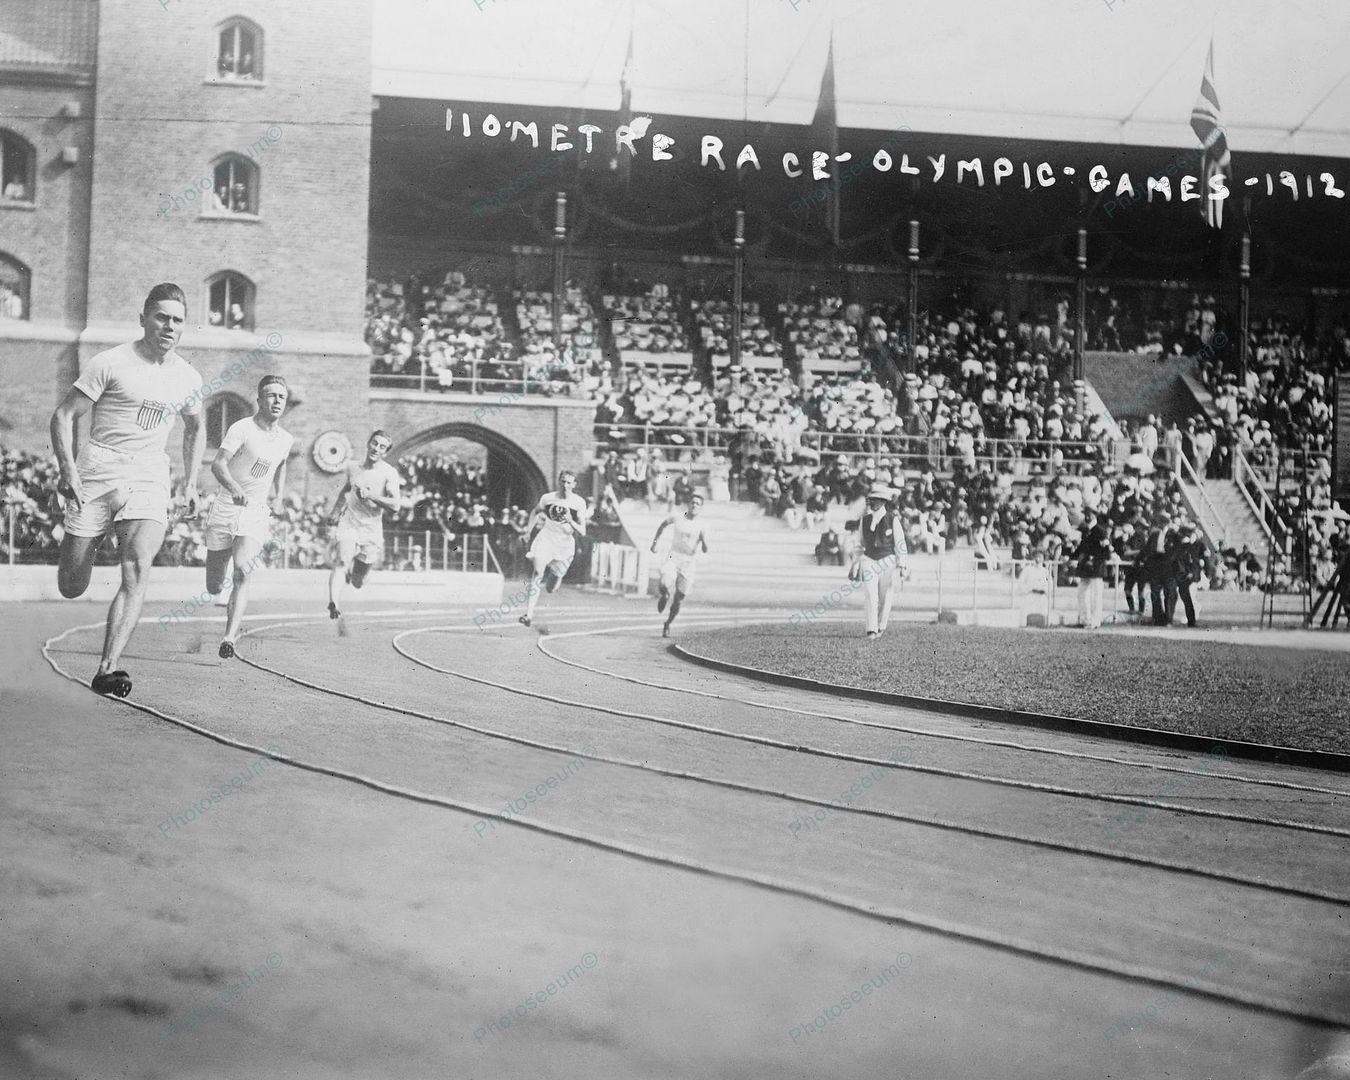  photo 110metrerace-OlympicGames-1912.jpg